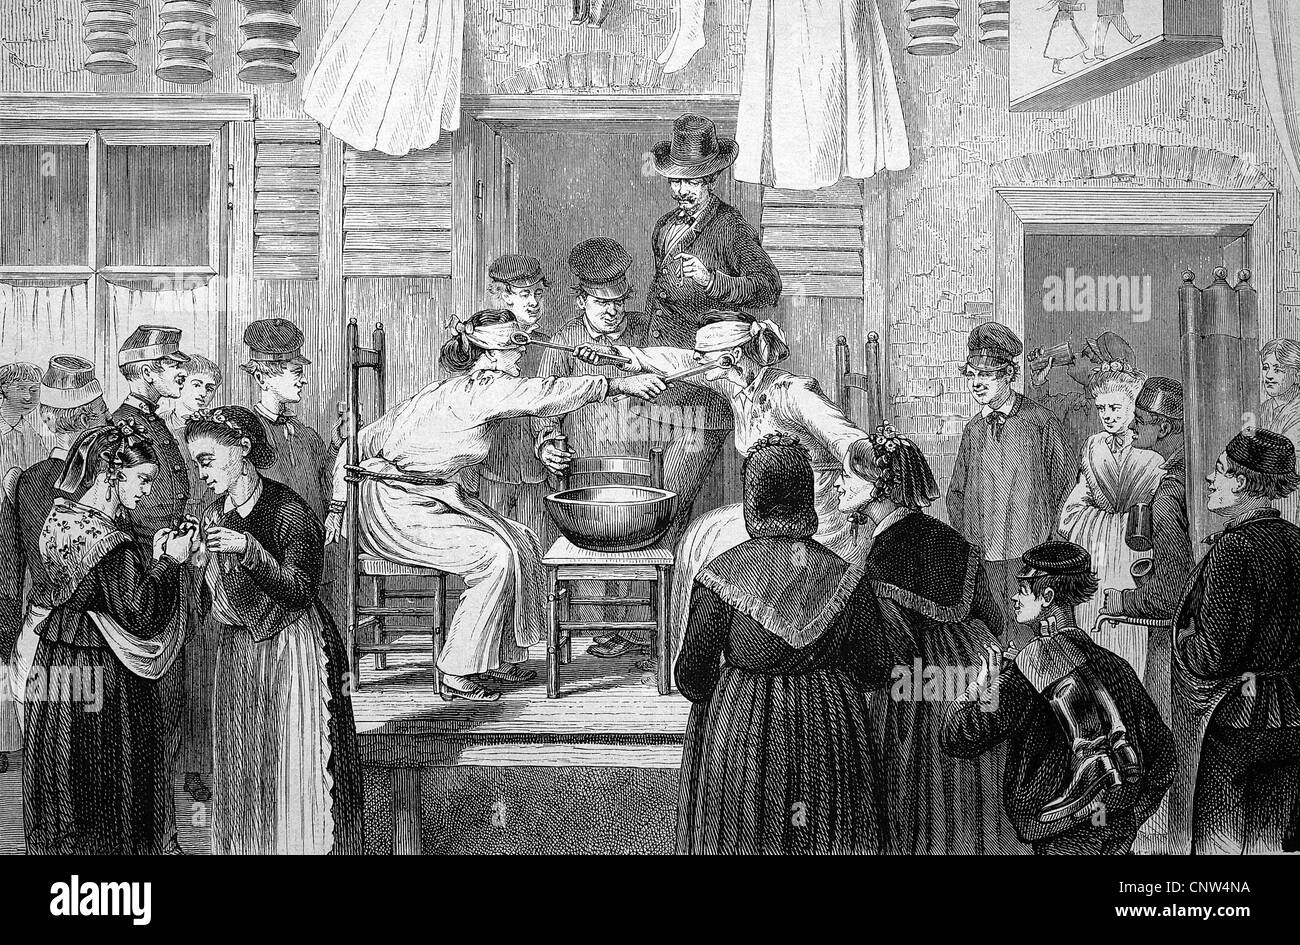 Porridge fight in the Marolles district in Brussels, Belgium, historical wood engraving, 1886 Stock Photo